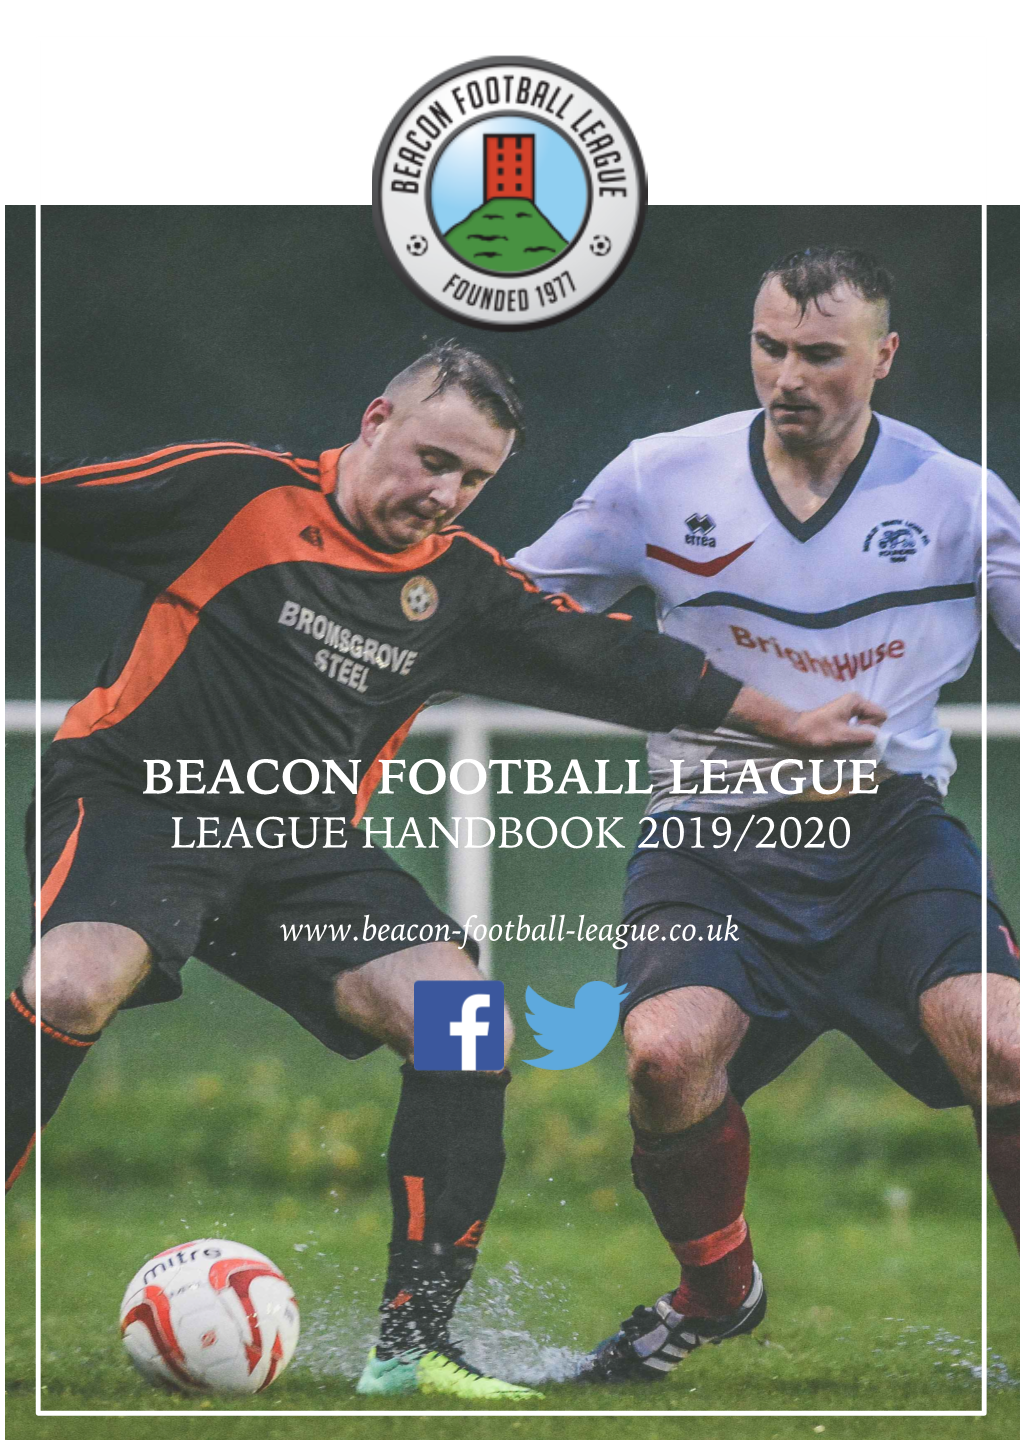 League Handbook 2019/2020